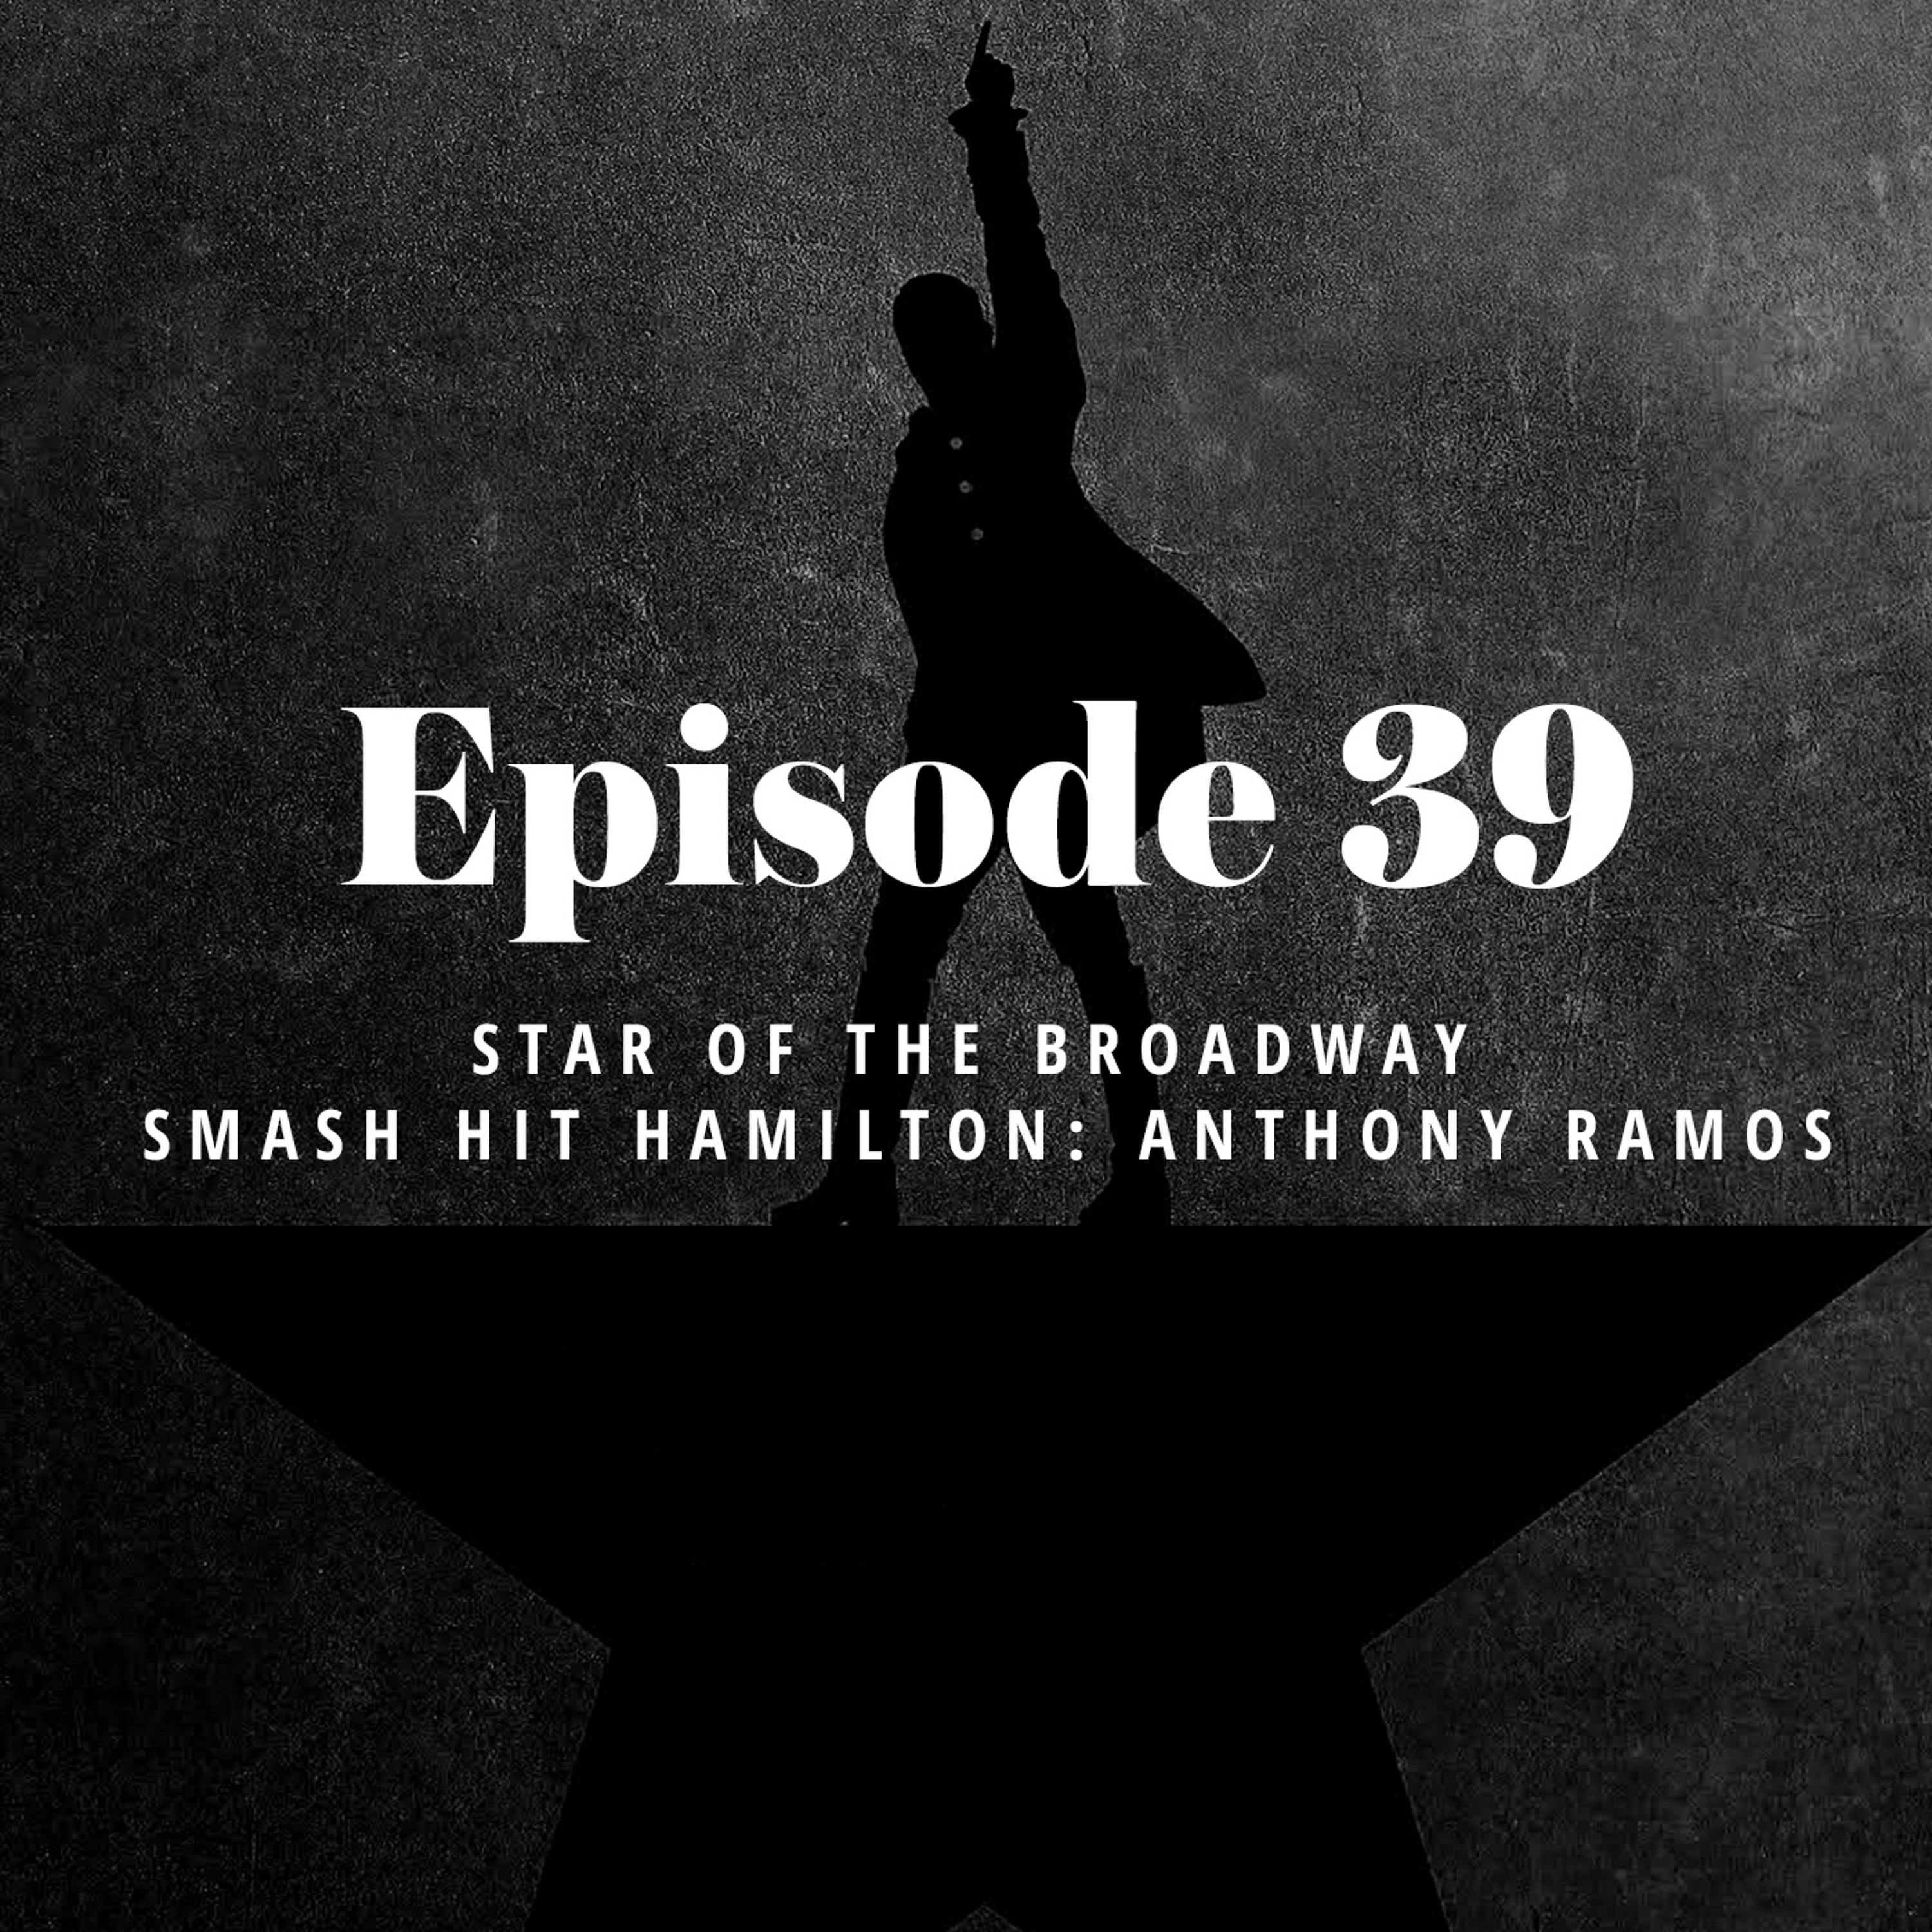 Episode 39: Star of the Broadway smash hit Hamilton: Anthony Ramos